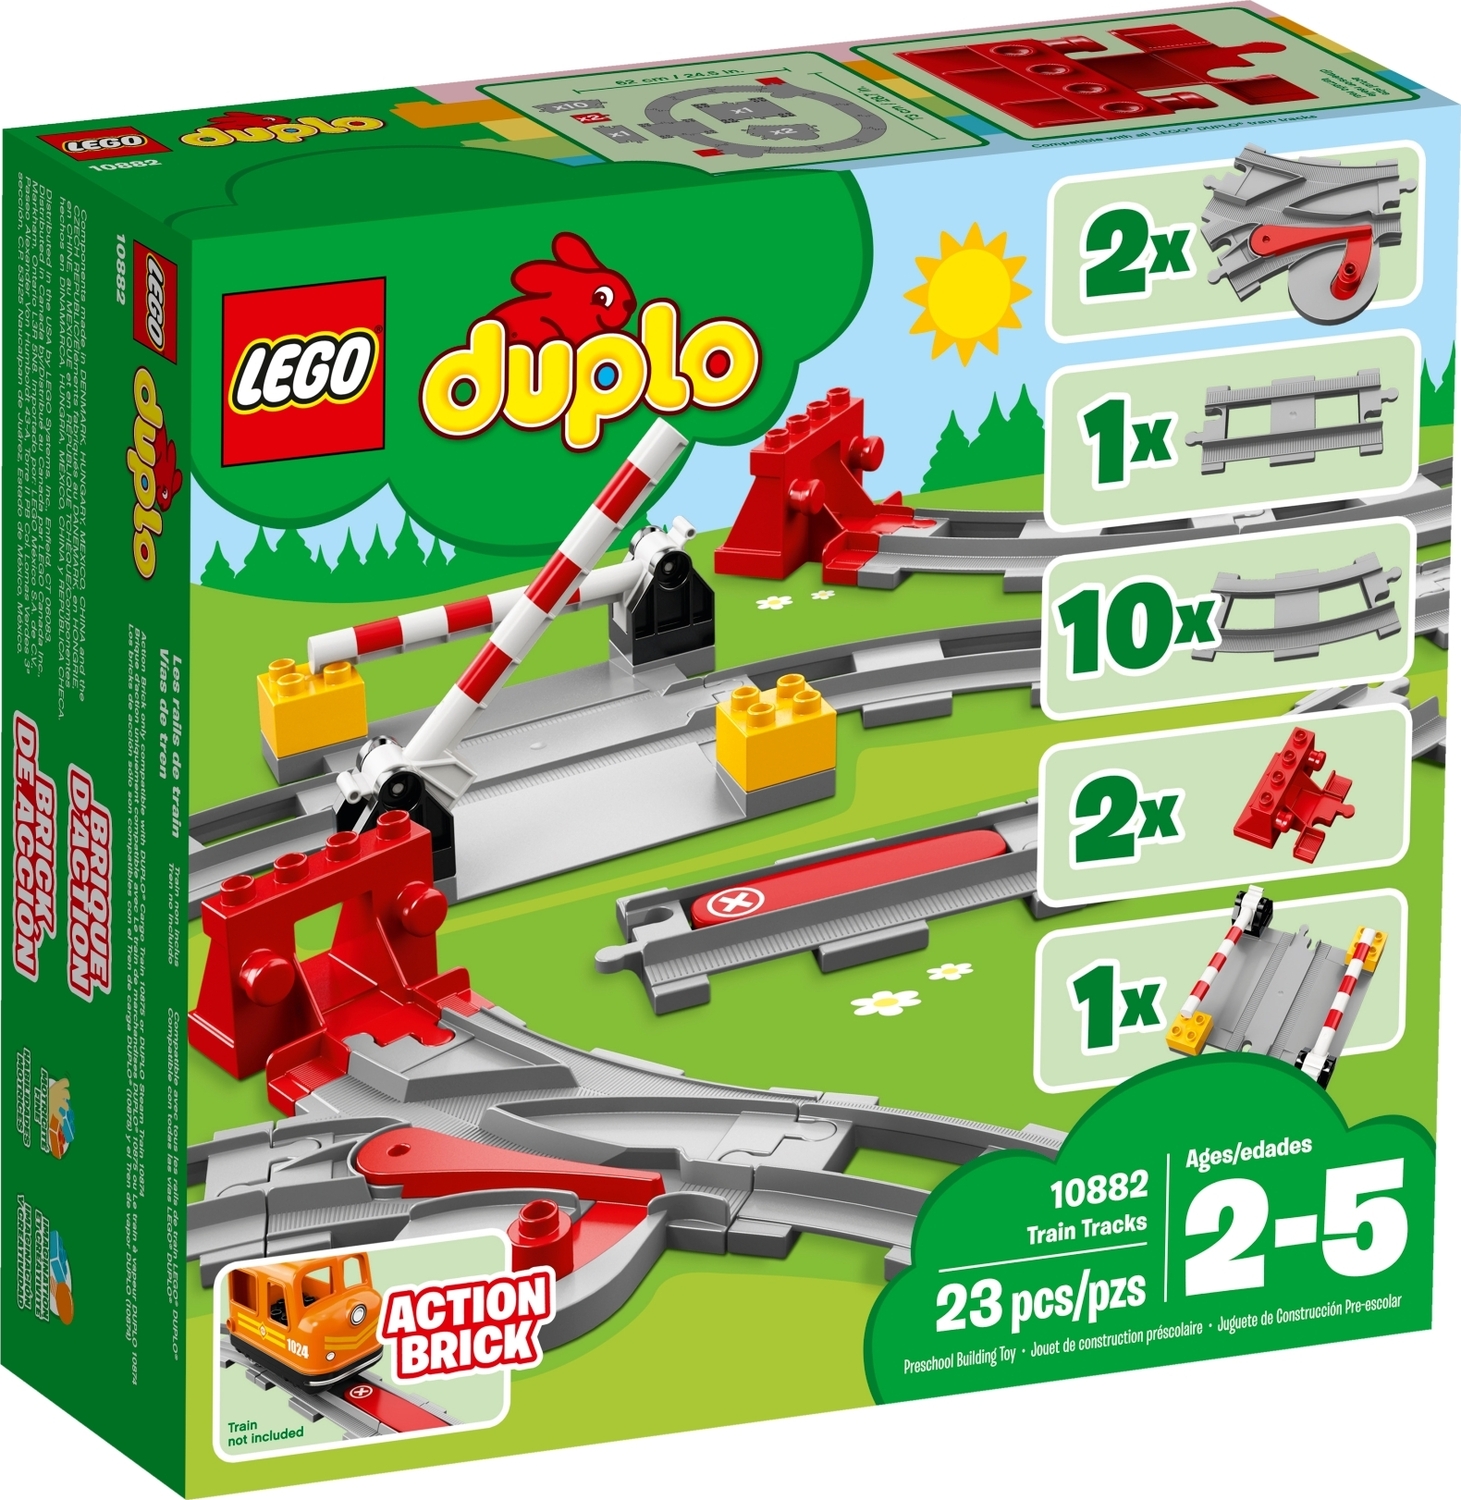 LEGO DUPLO 10882 Train Tracks - Imagine That Toys